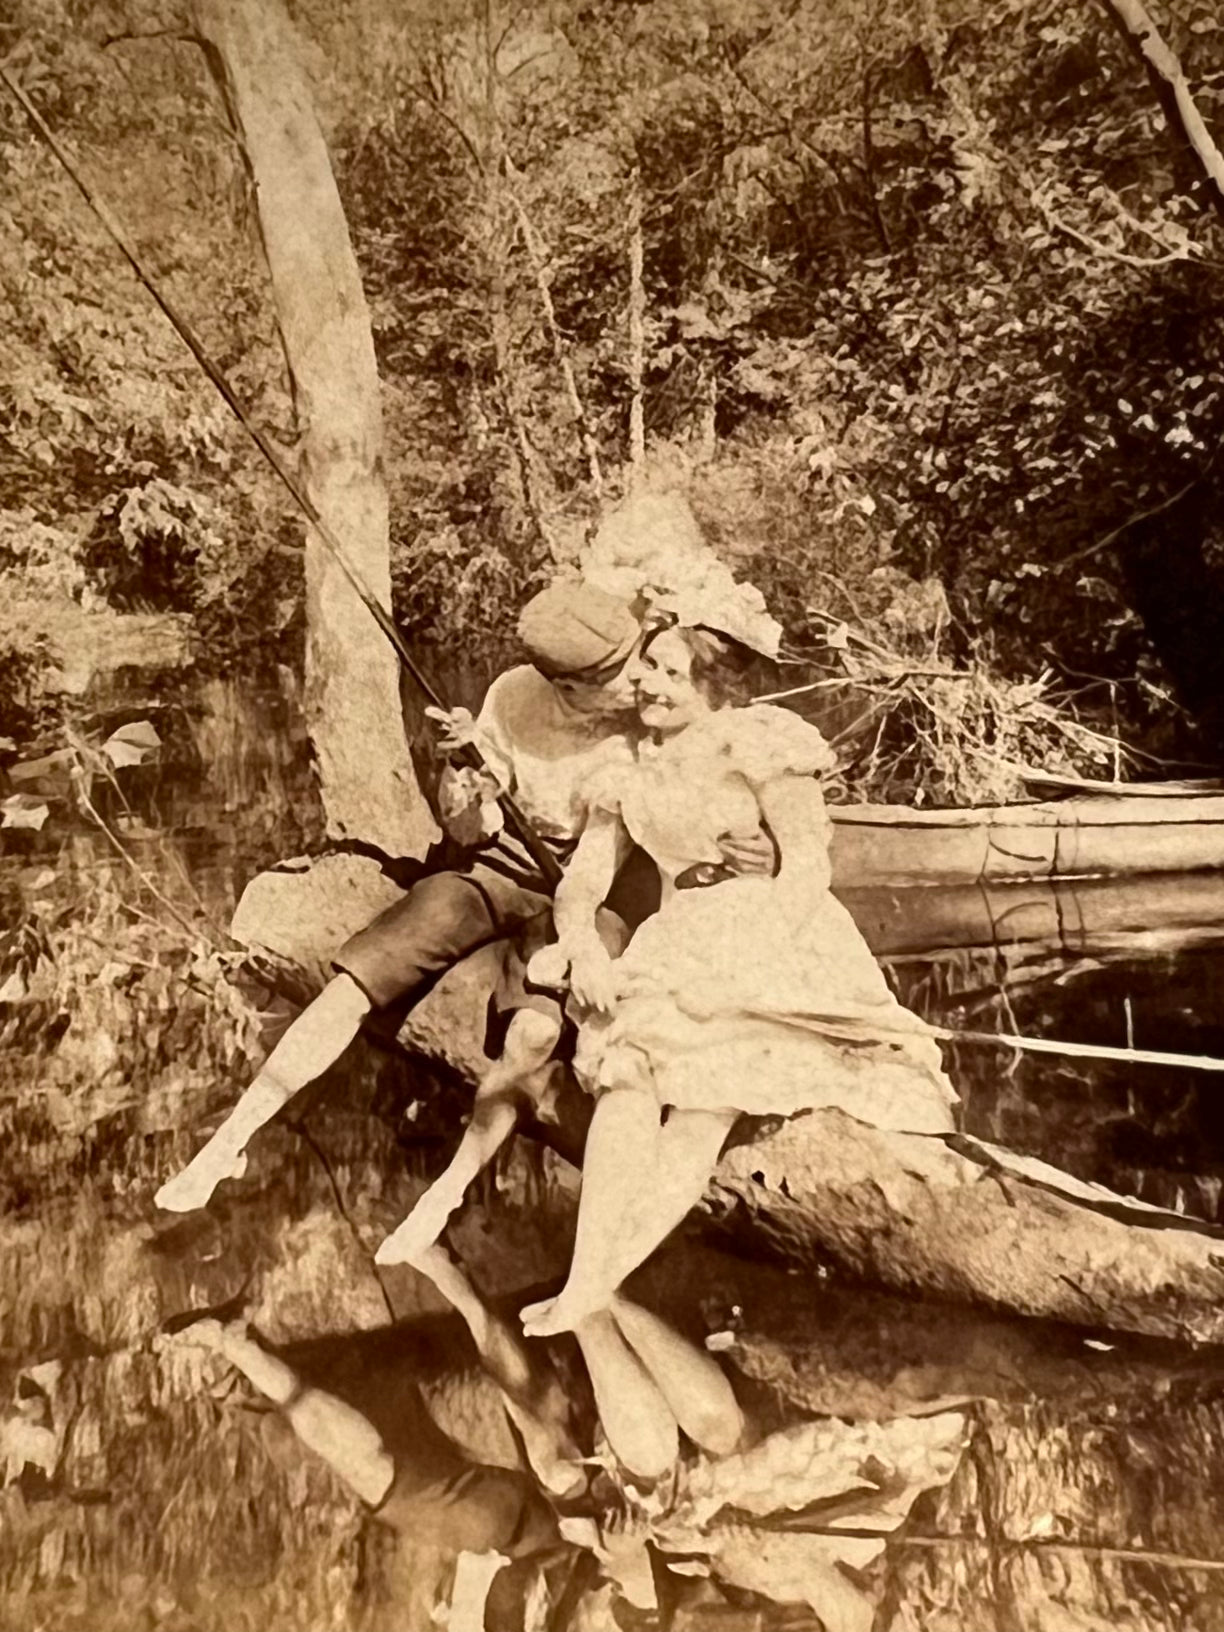 A fishing smack, fotografía estereoscópica escena romántica - Strohmeyer and Wyman, ca. 1899